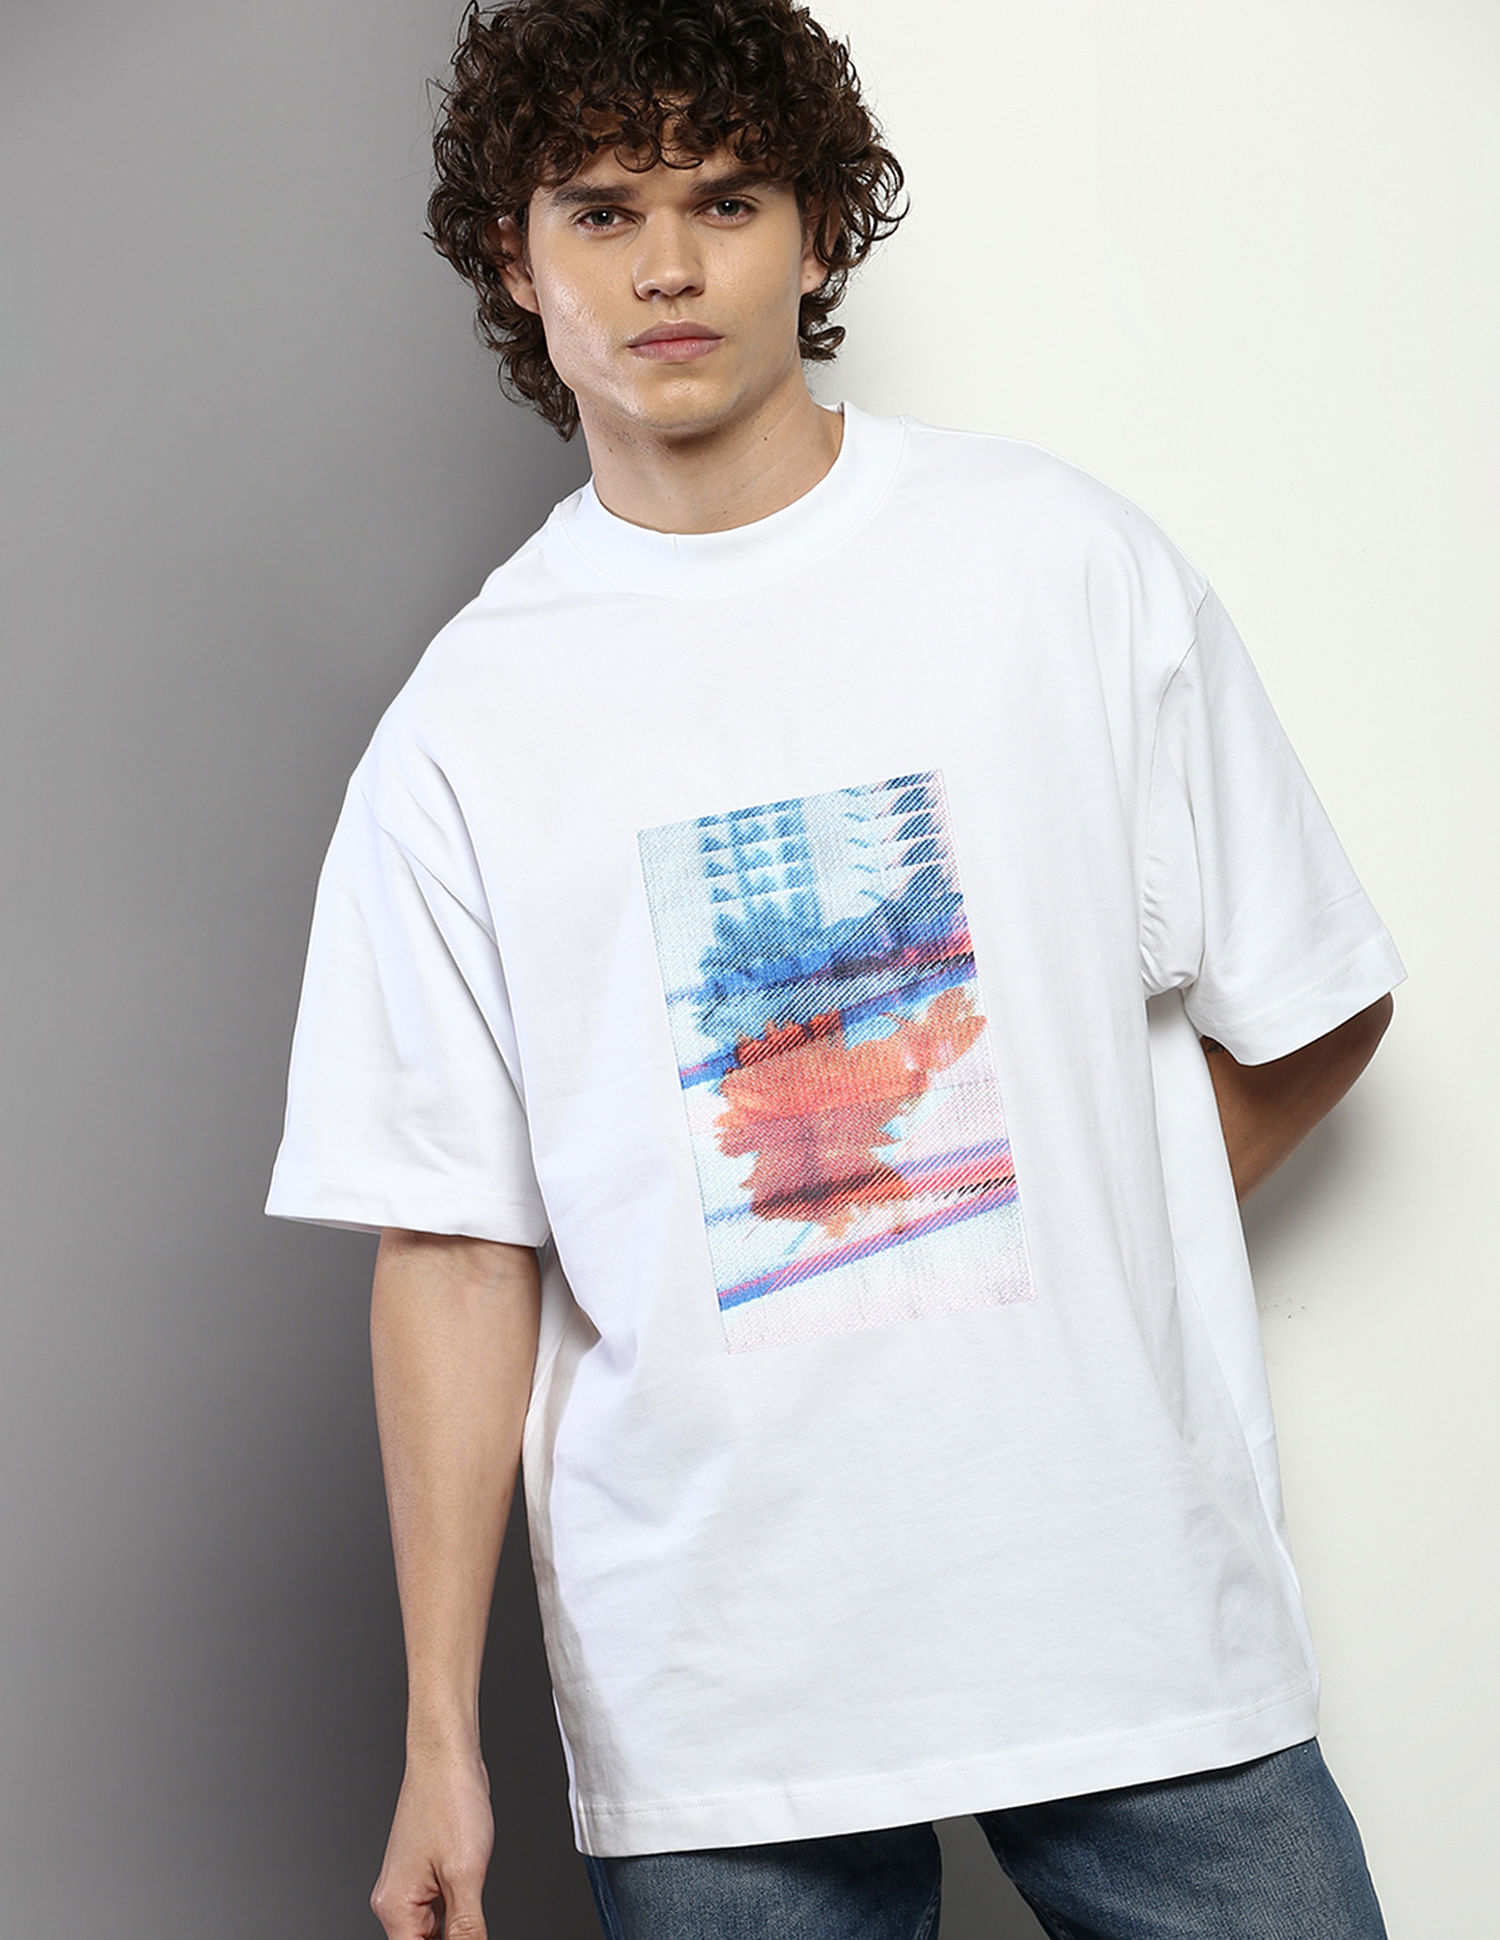 Buy Calvin Klein Men Blue Crew Neck Brand Print T-Shirt - NNNOW.com